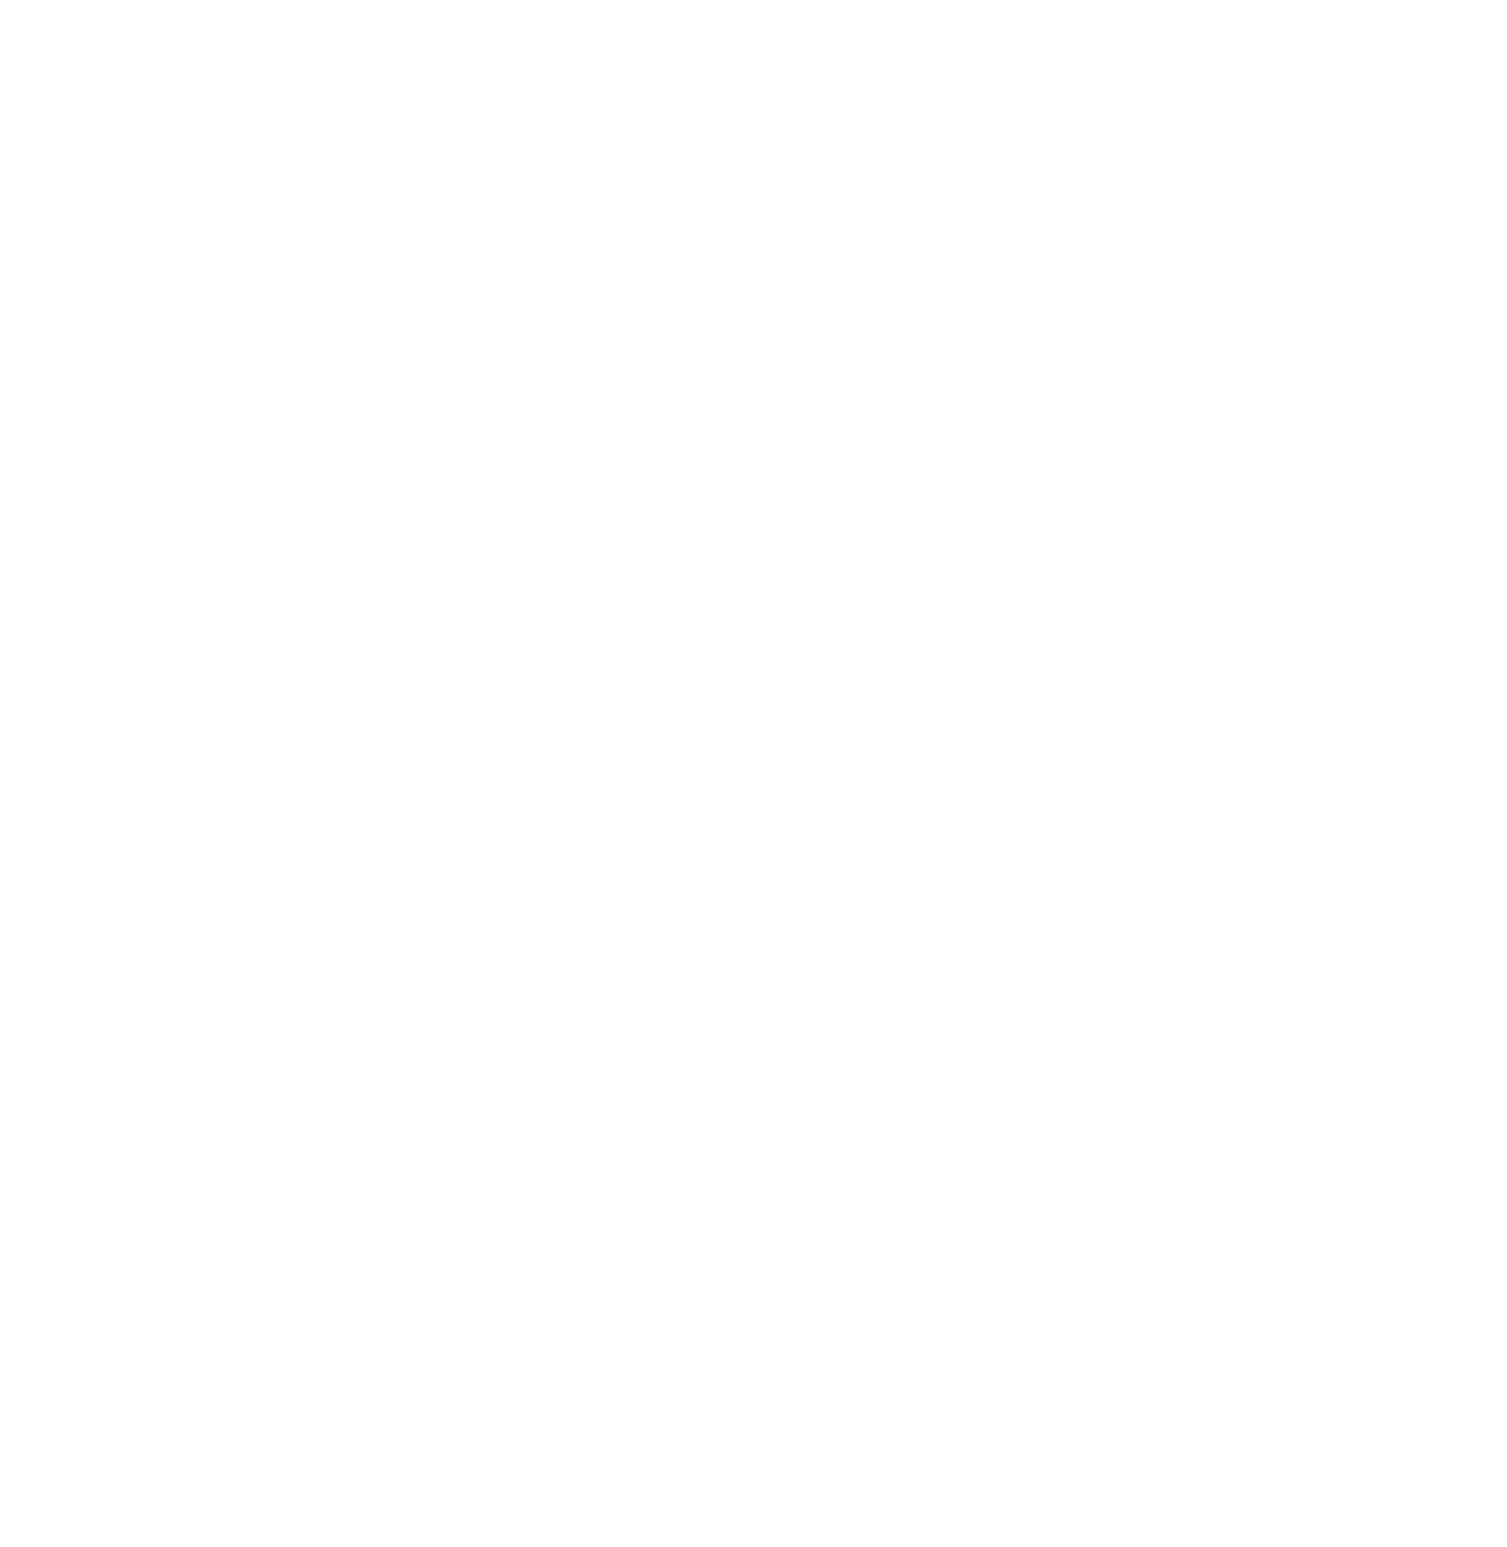 Dufry logo for dark backgrounds (transparent PNG)